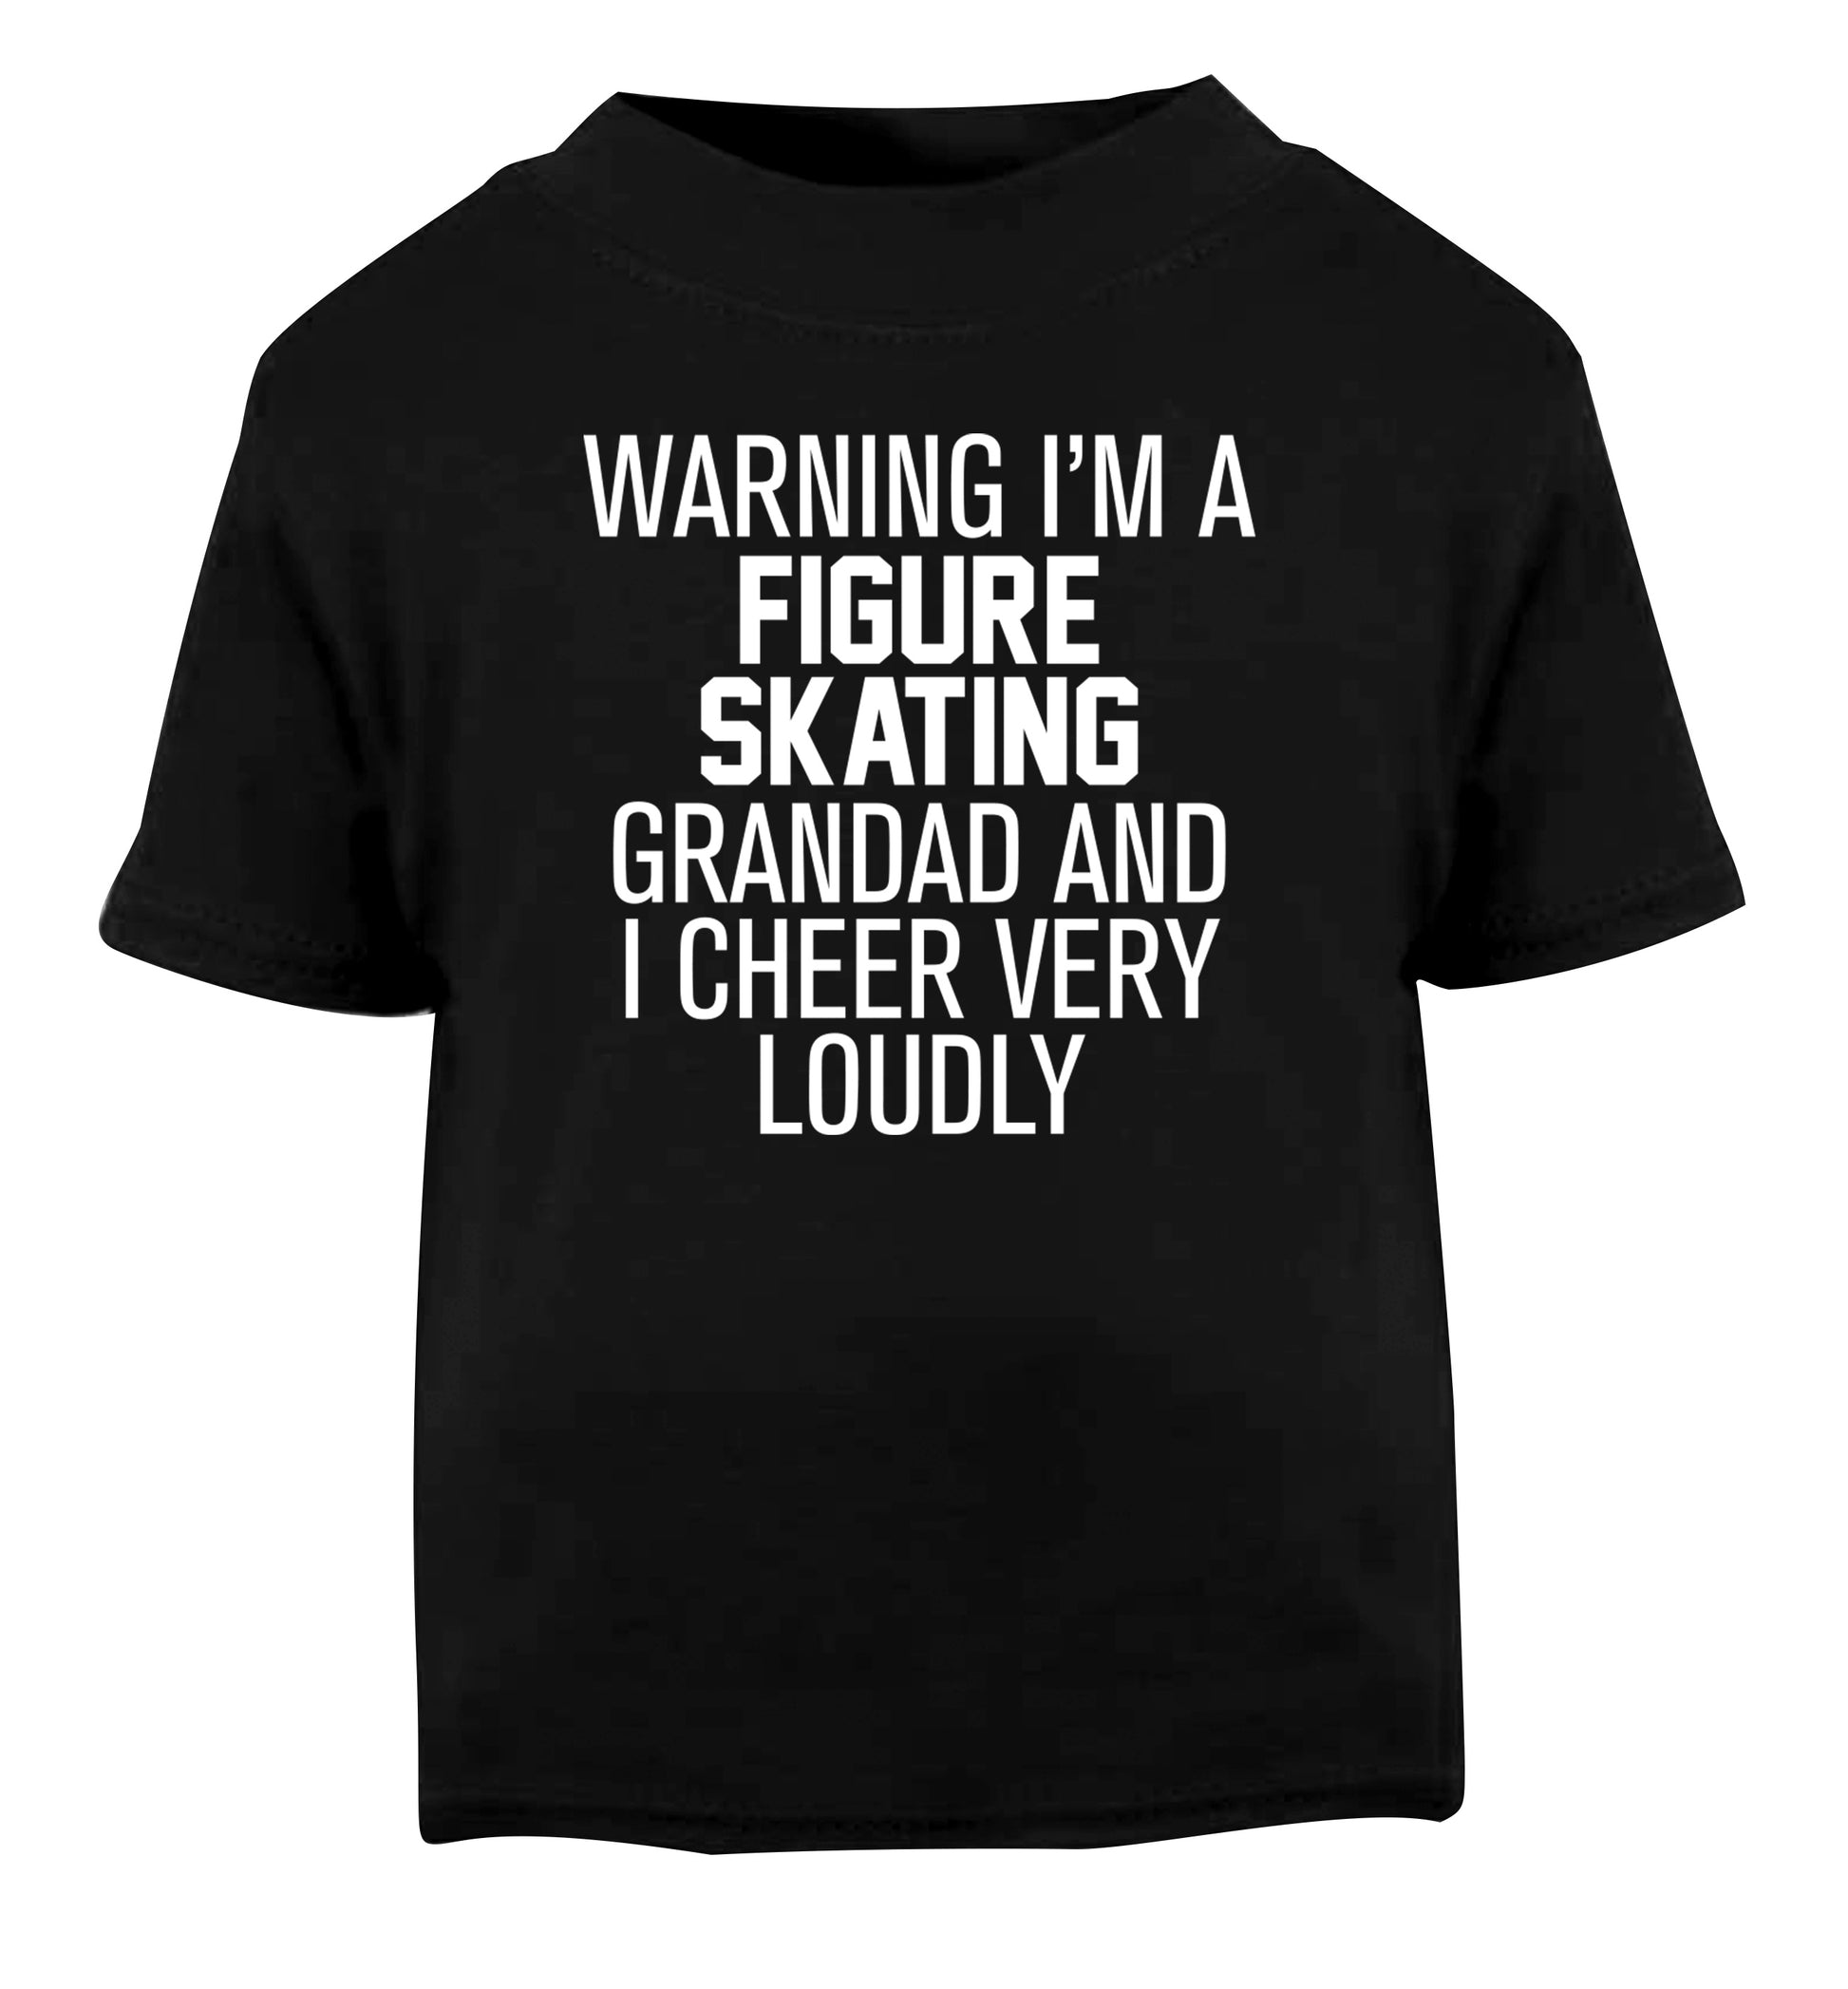 Warning I'm a figure skating grandad and I cheer very loudly Black Baby Toddler Tshirt 2 years